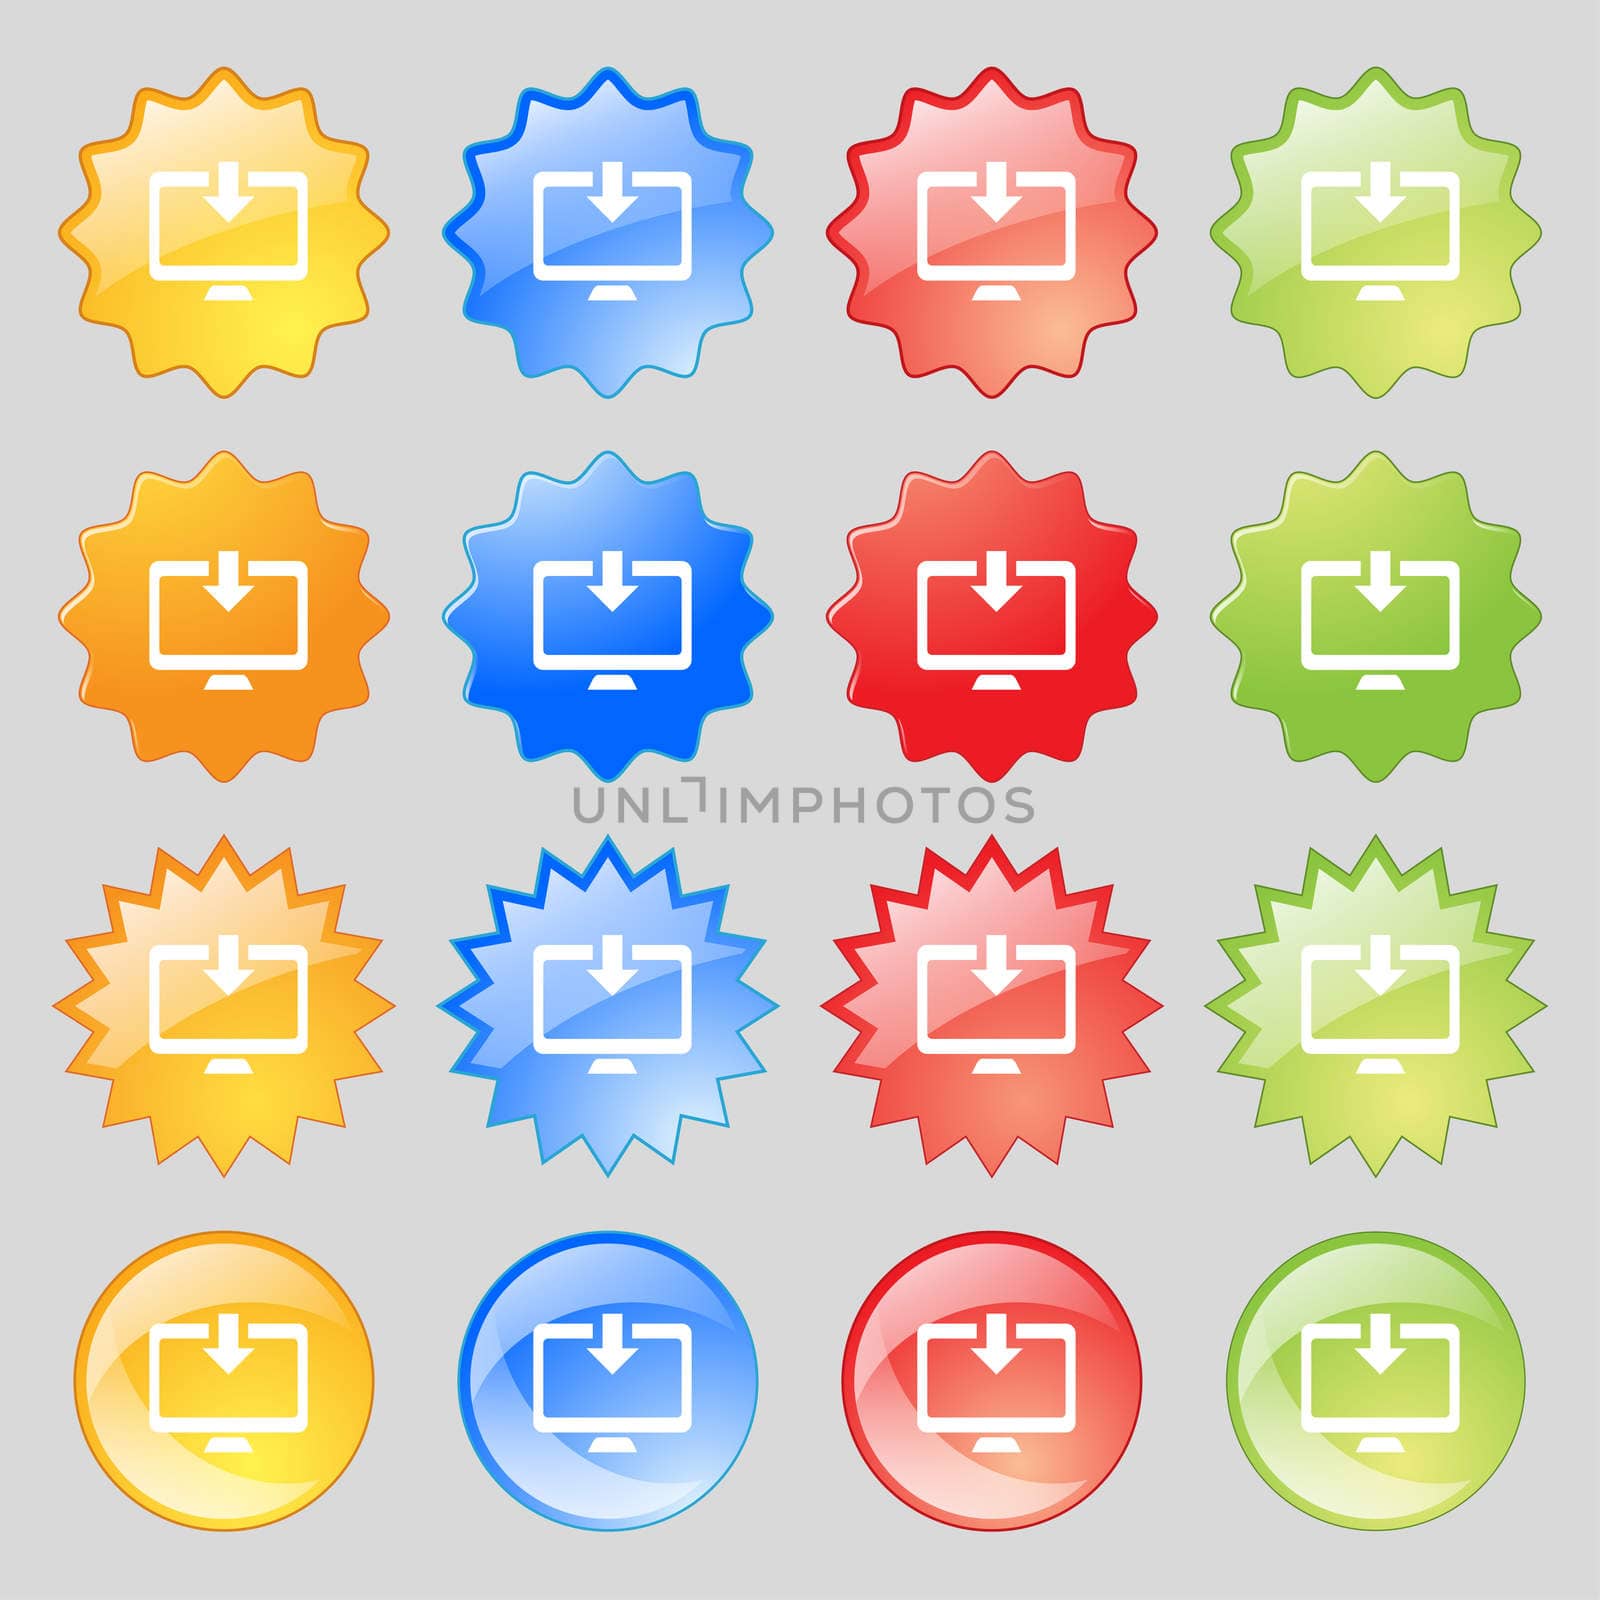 Download, Load, Backup icon sign. Big set of 16 colorful modern buttons for your design. illustration